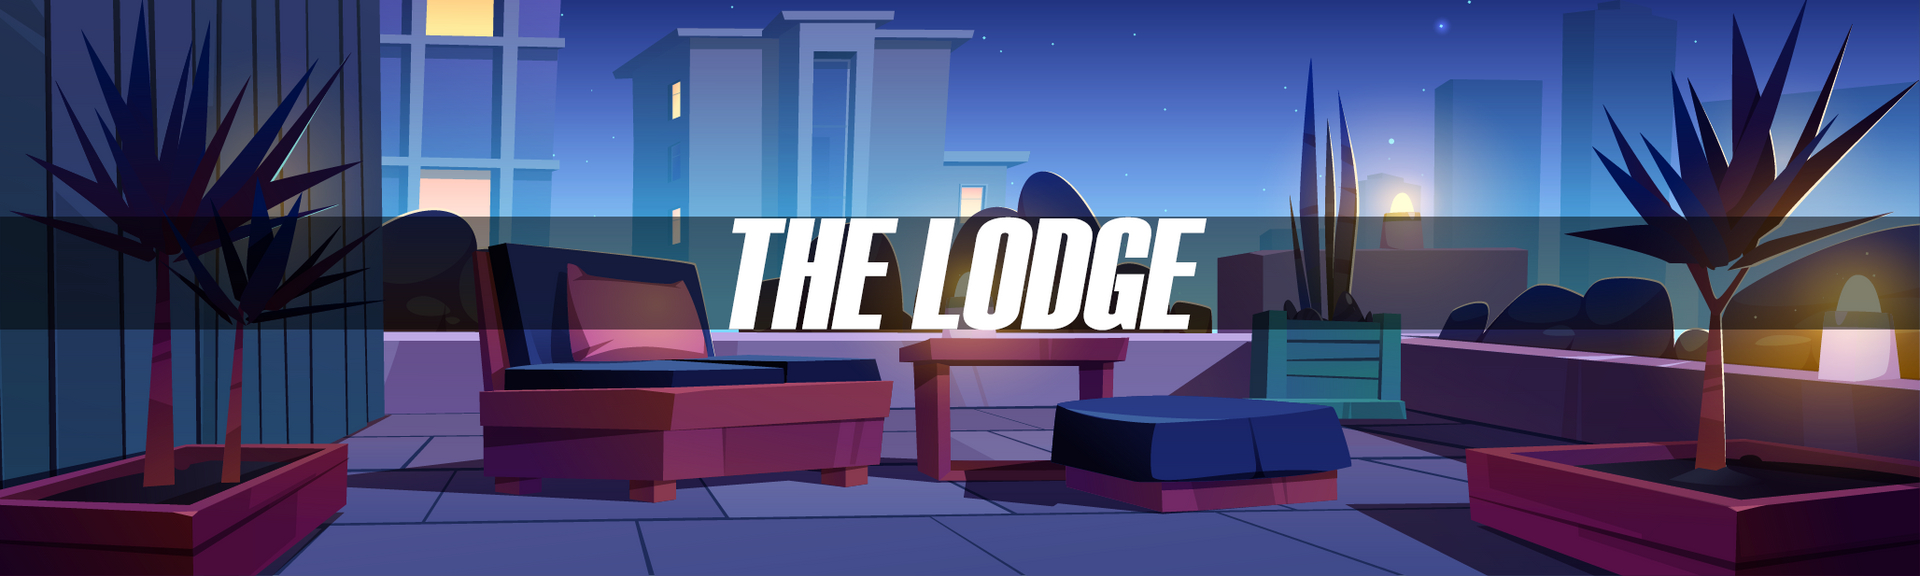 The Lodge [v0.1] main image